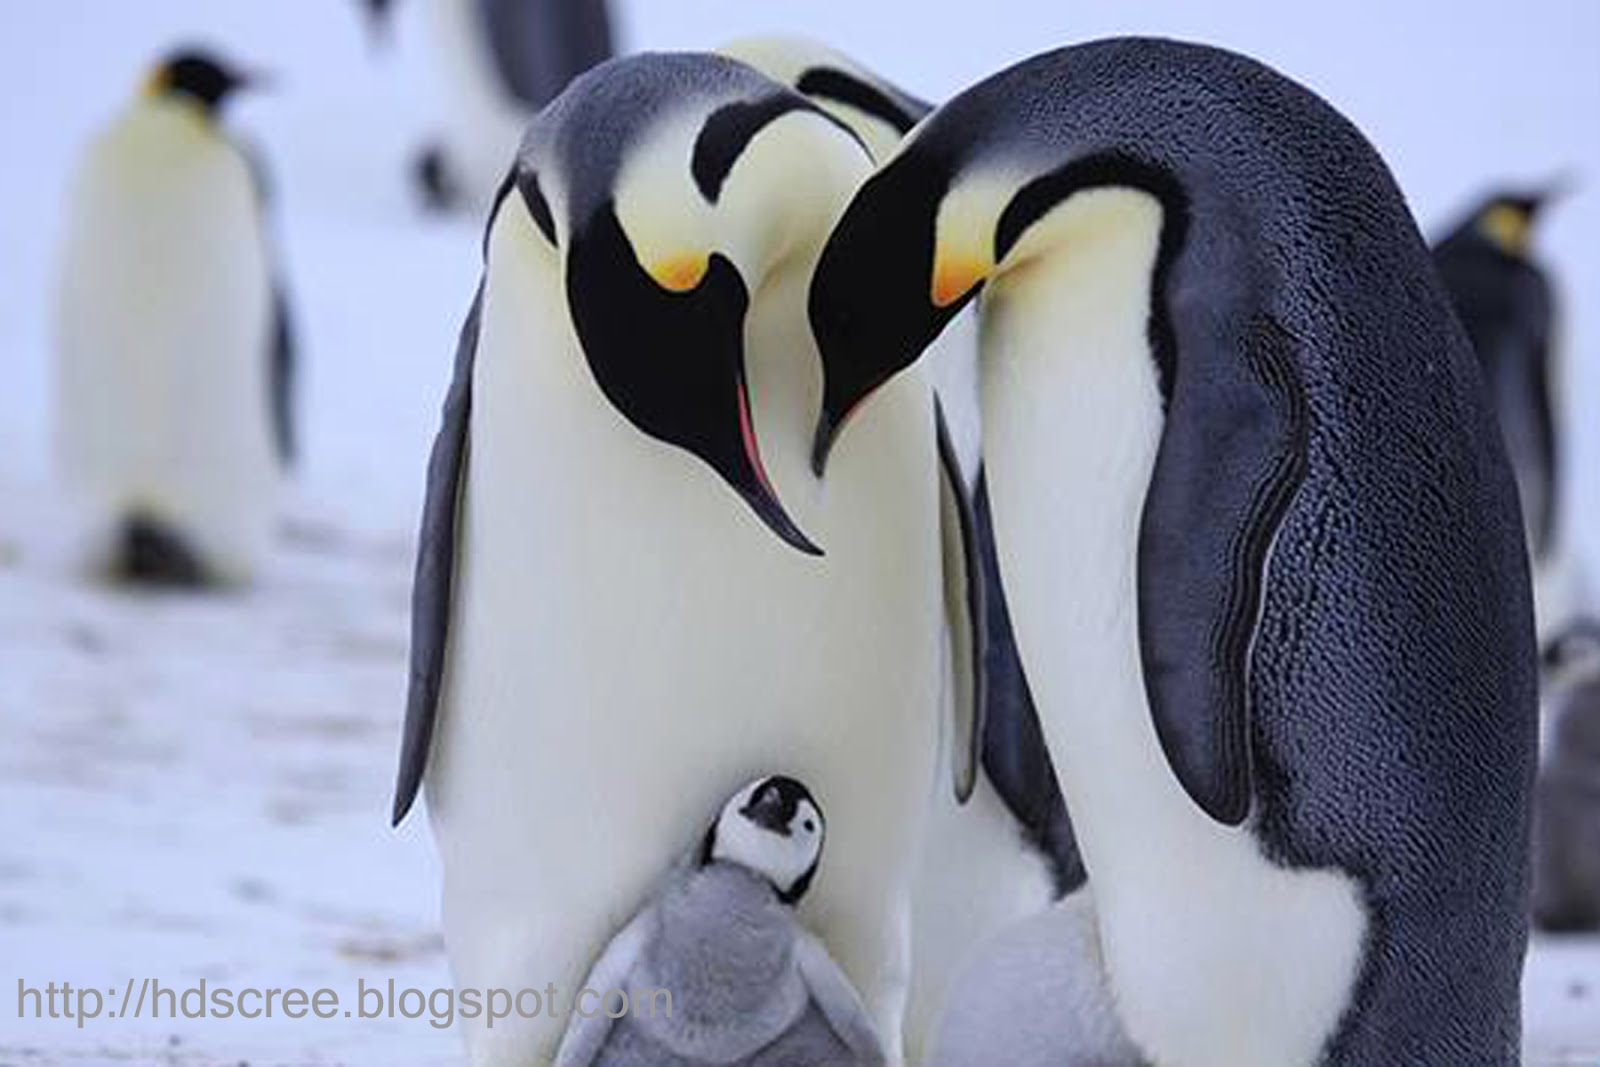 Best HD Screensaver Of Penguin Wallpaper